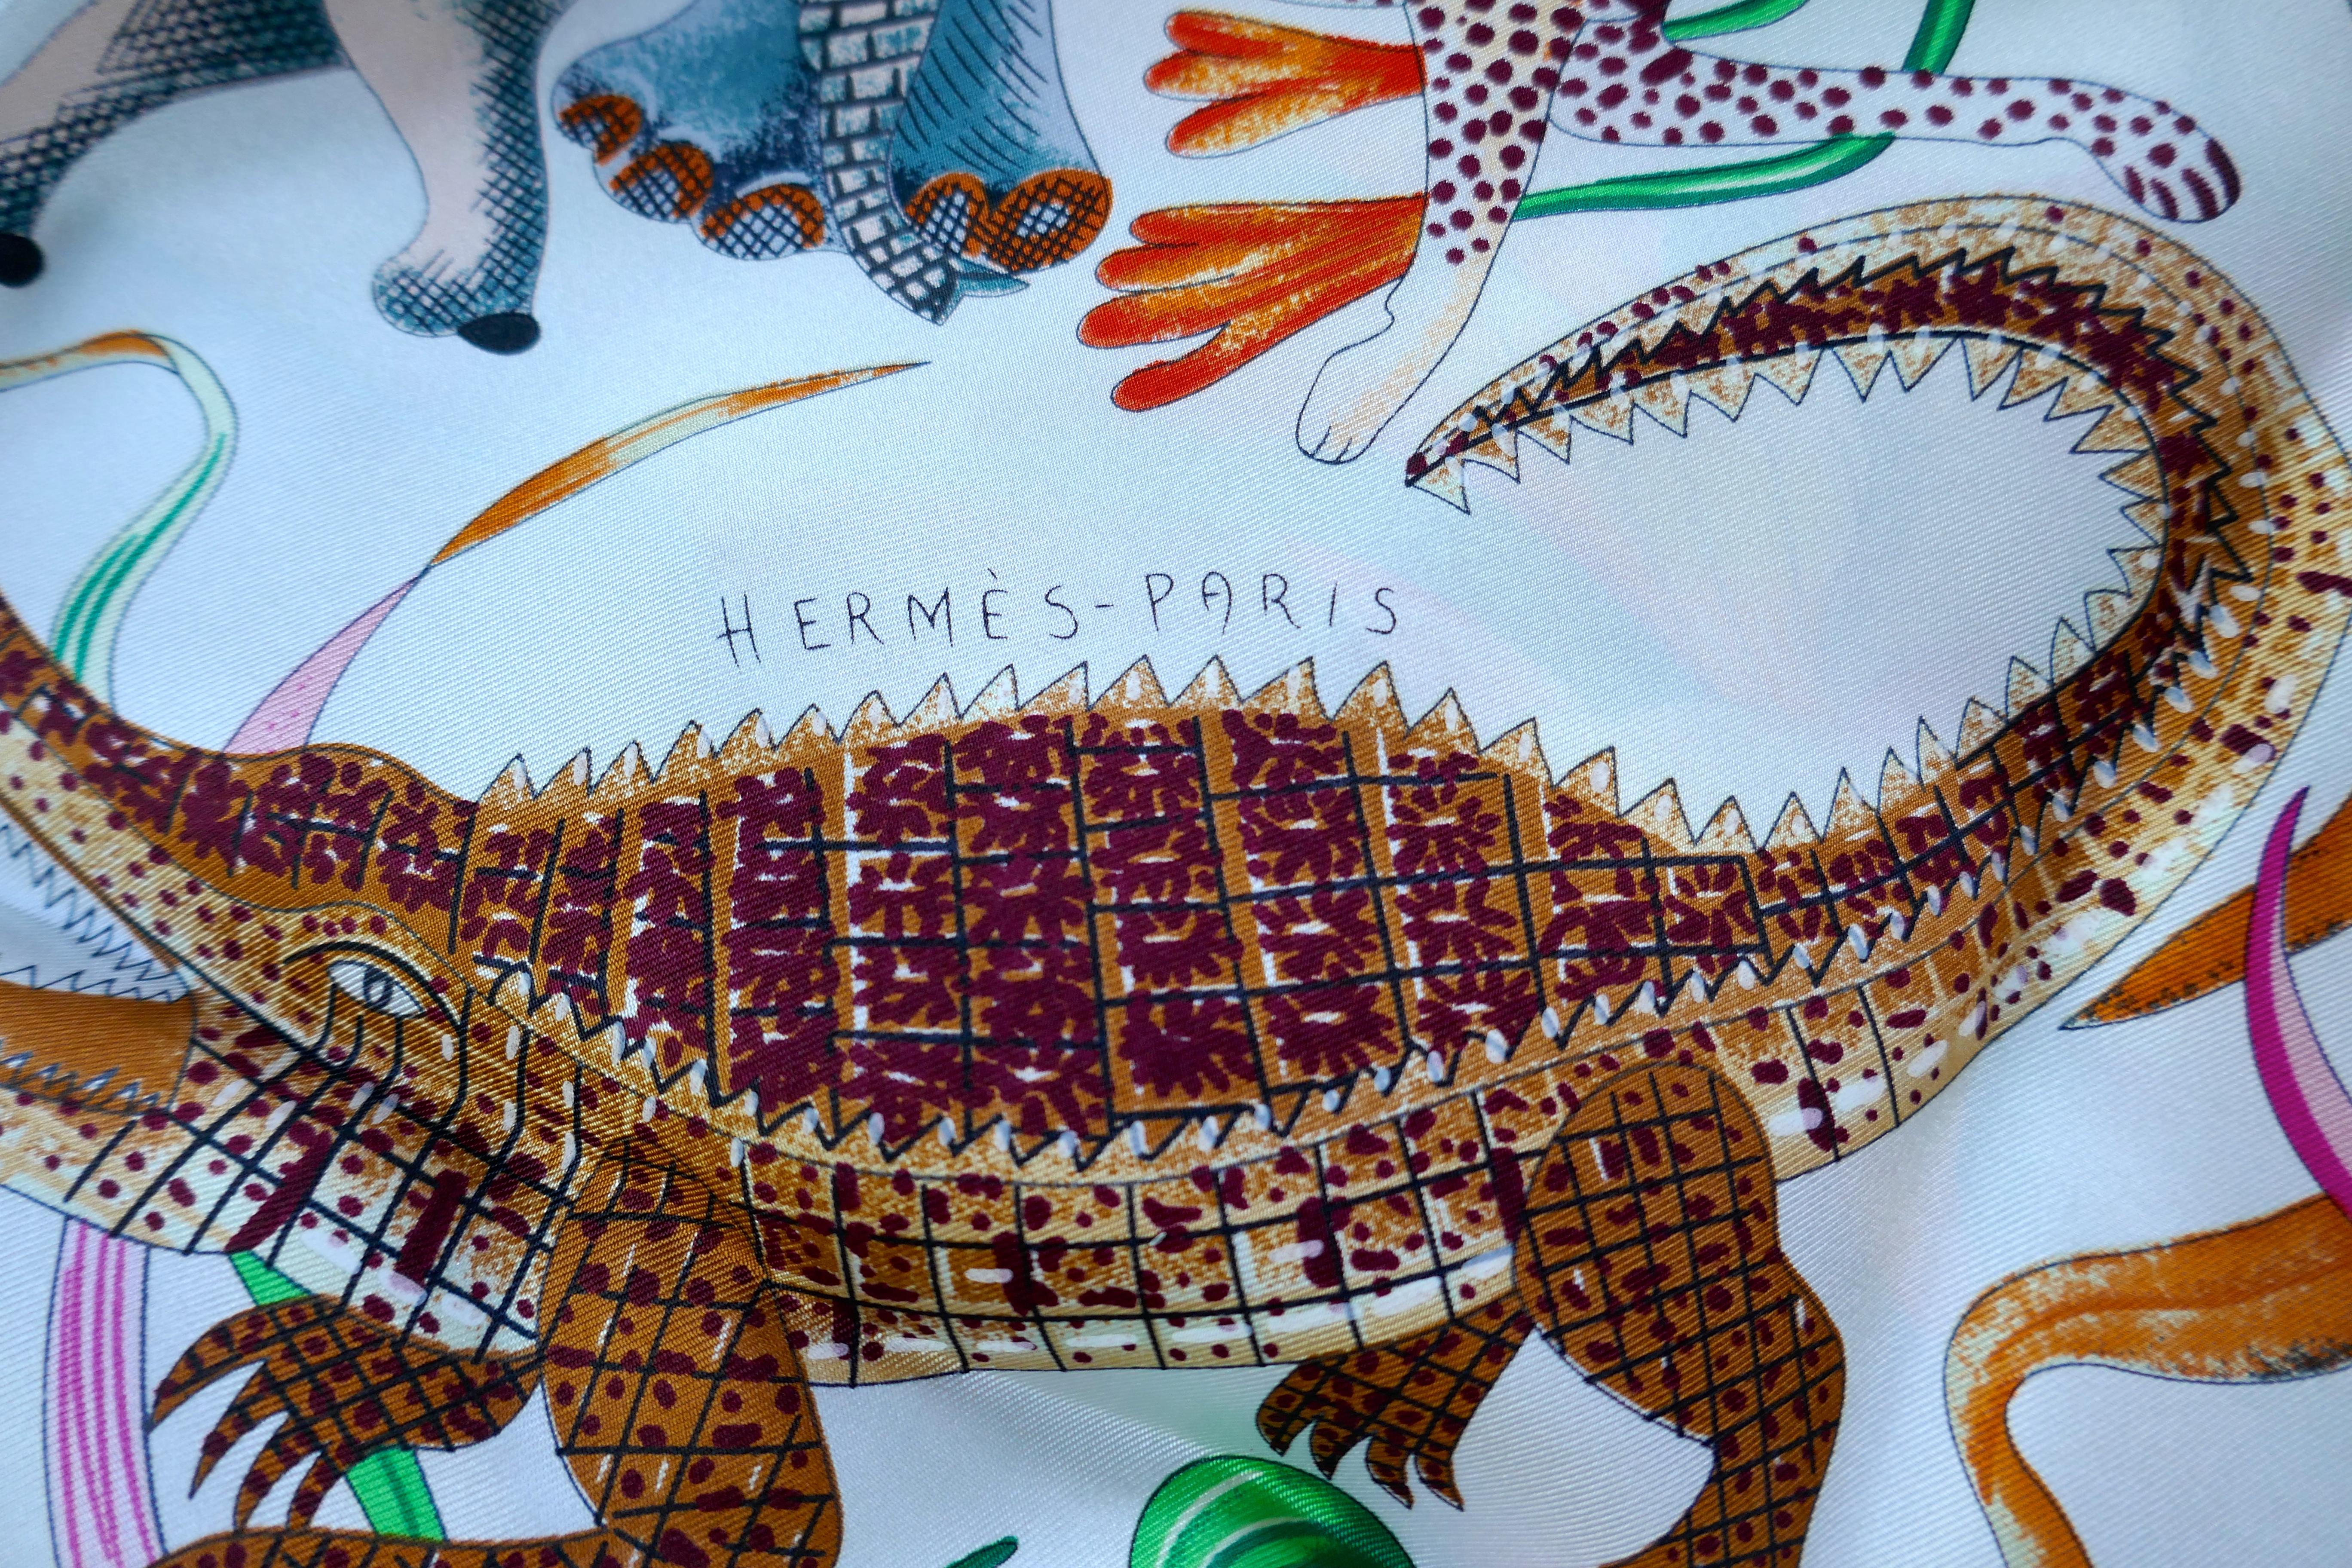 HERMÈS Ardmore Artists design “La Marche du Zambeze” 100% Silk Scarf,  Animals 5